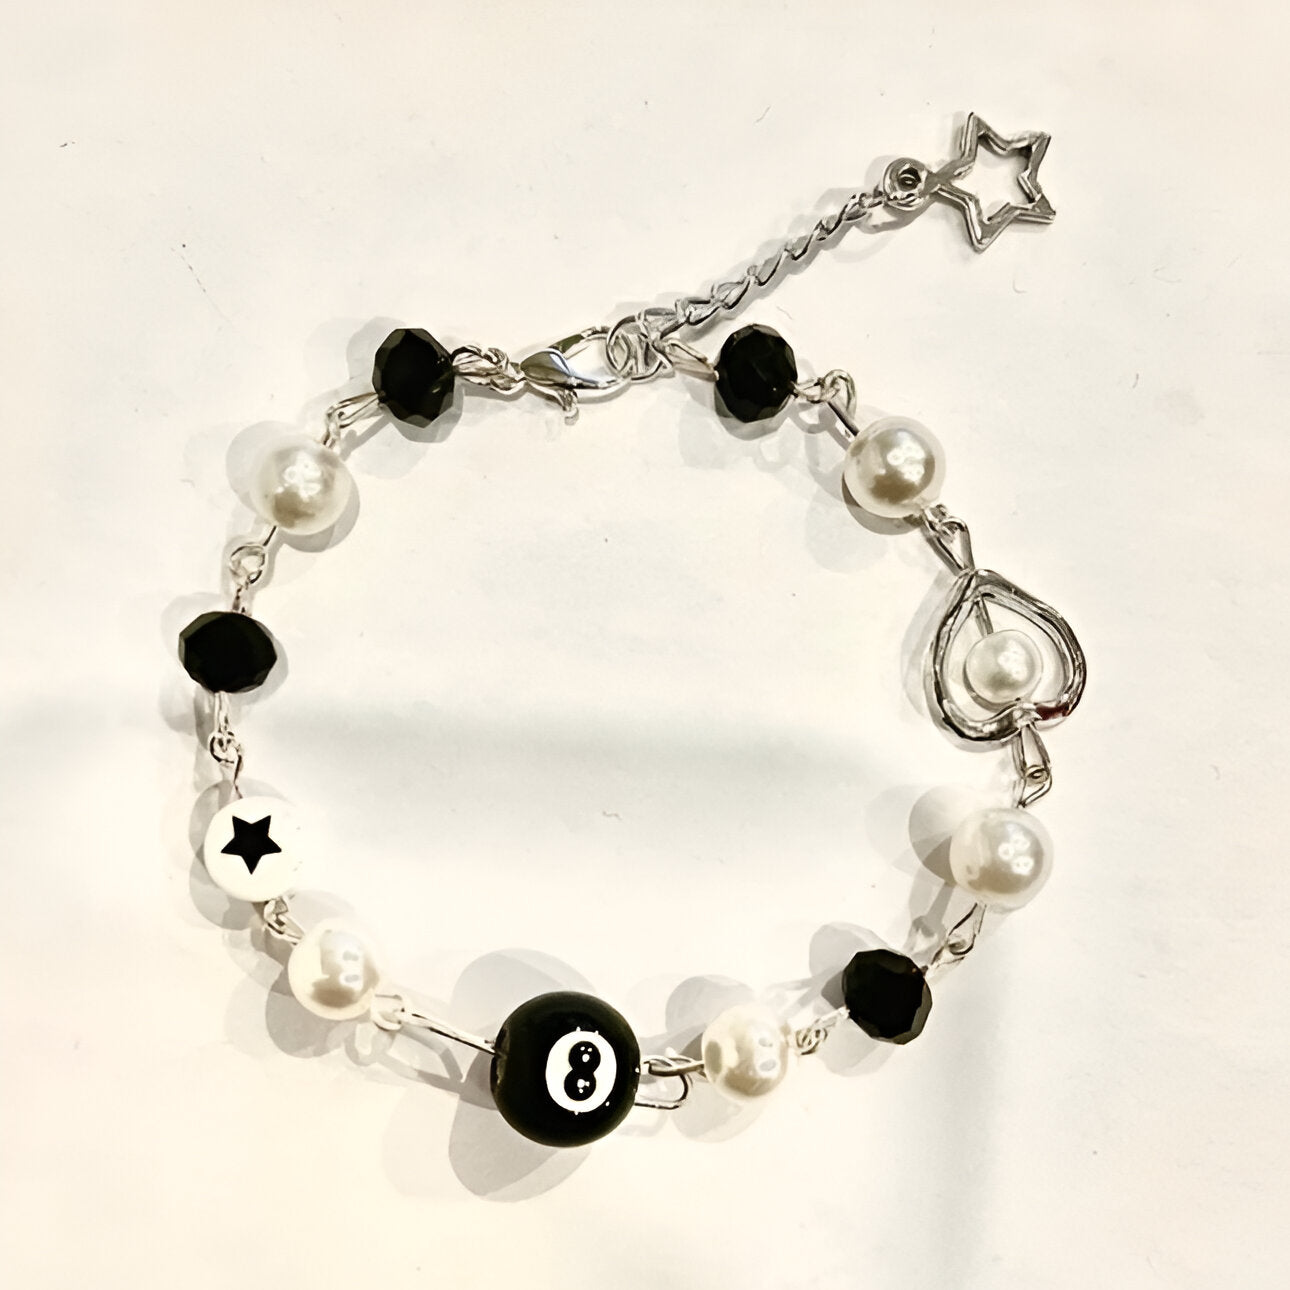 8-Ball Star Bracelets